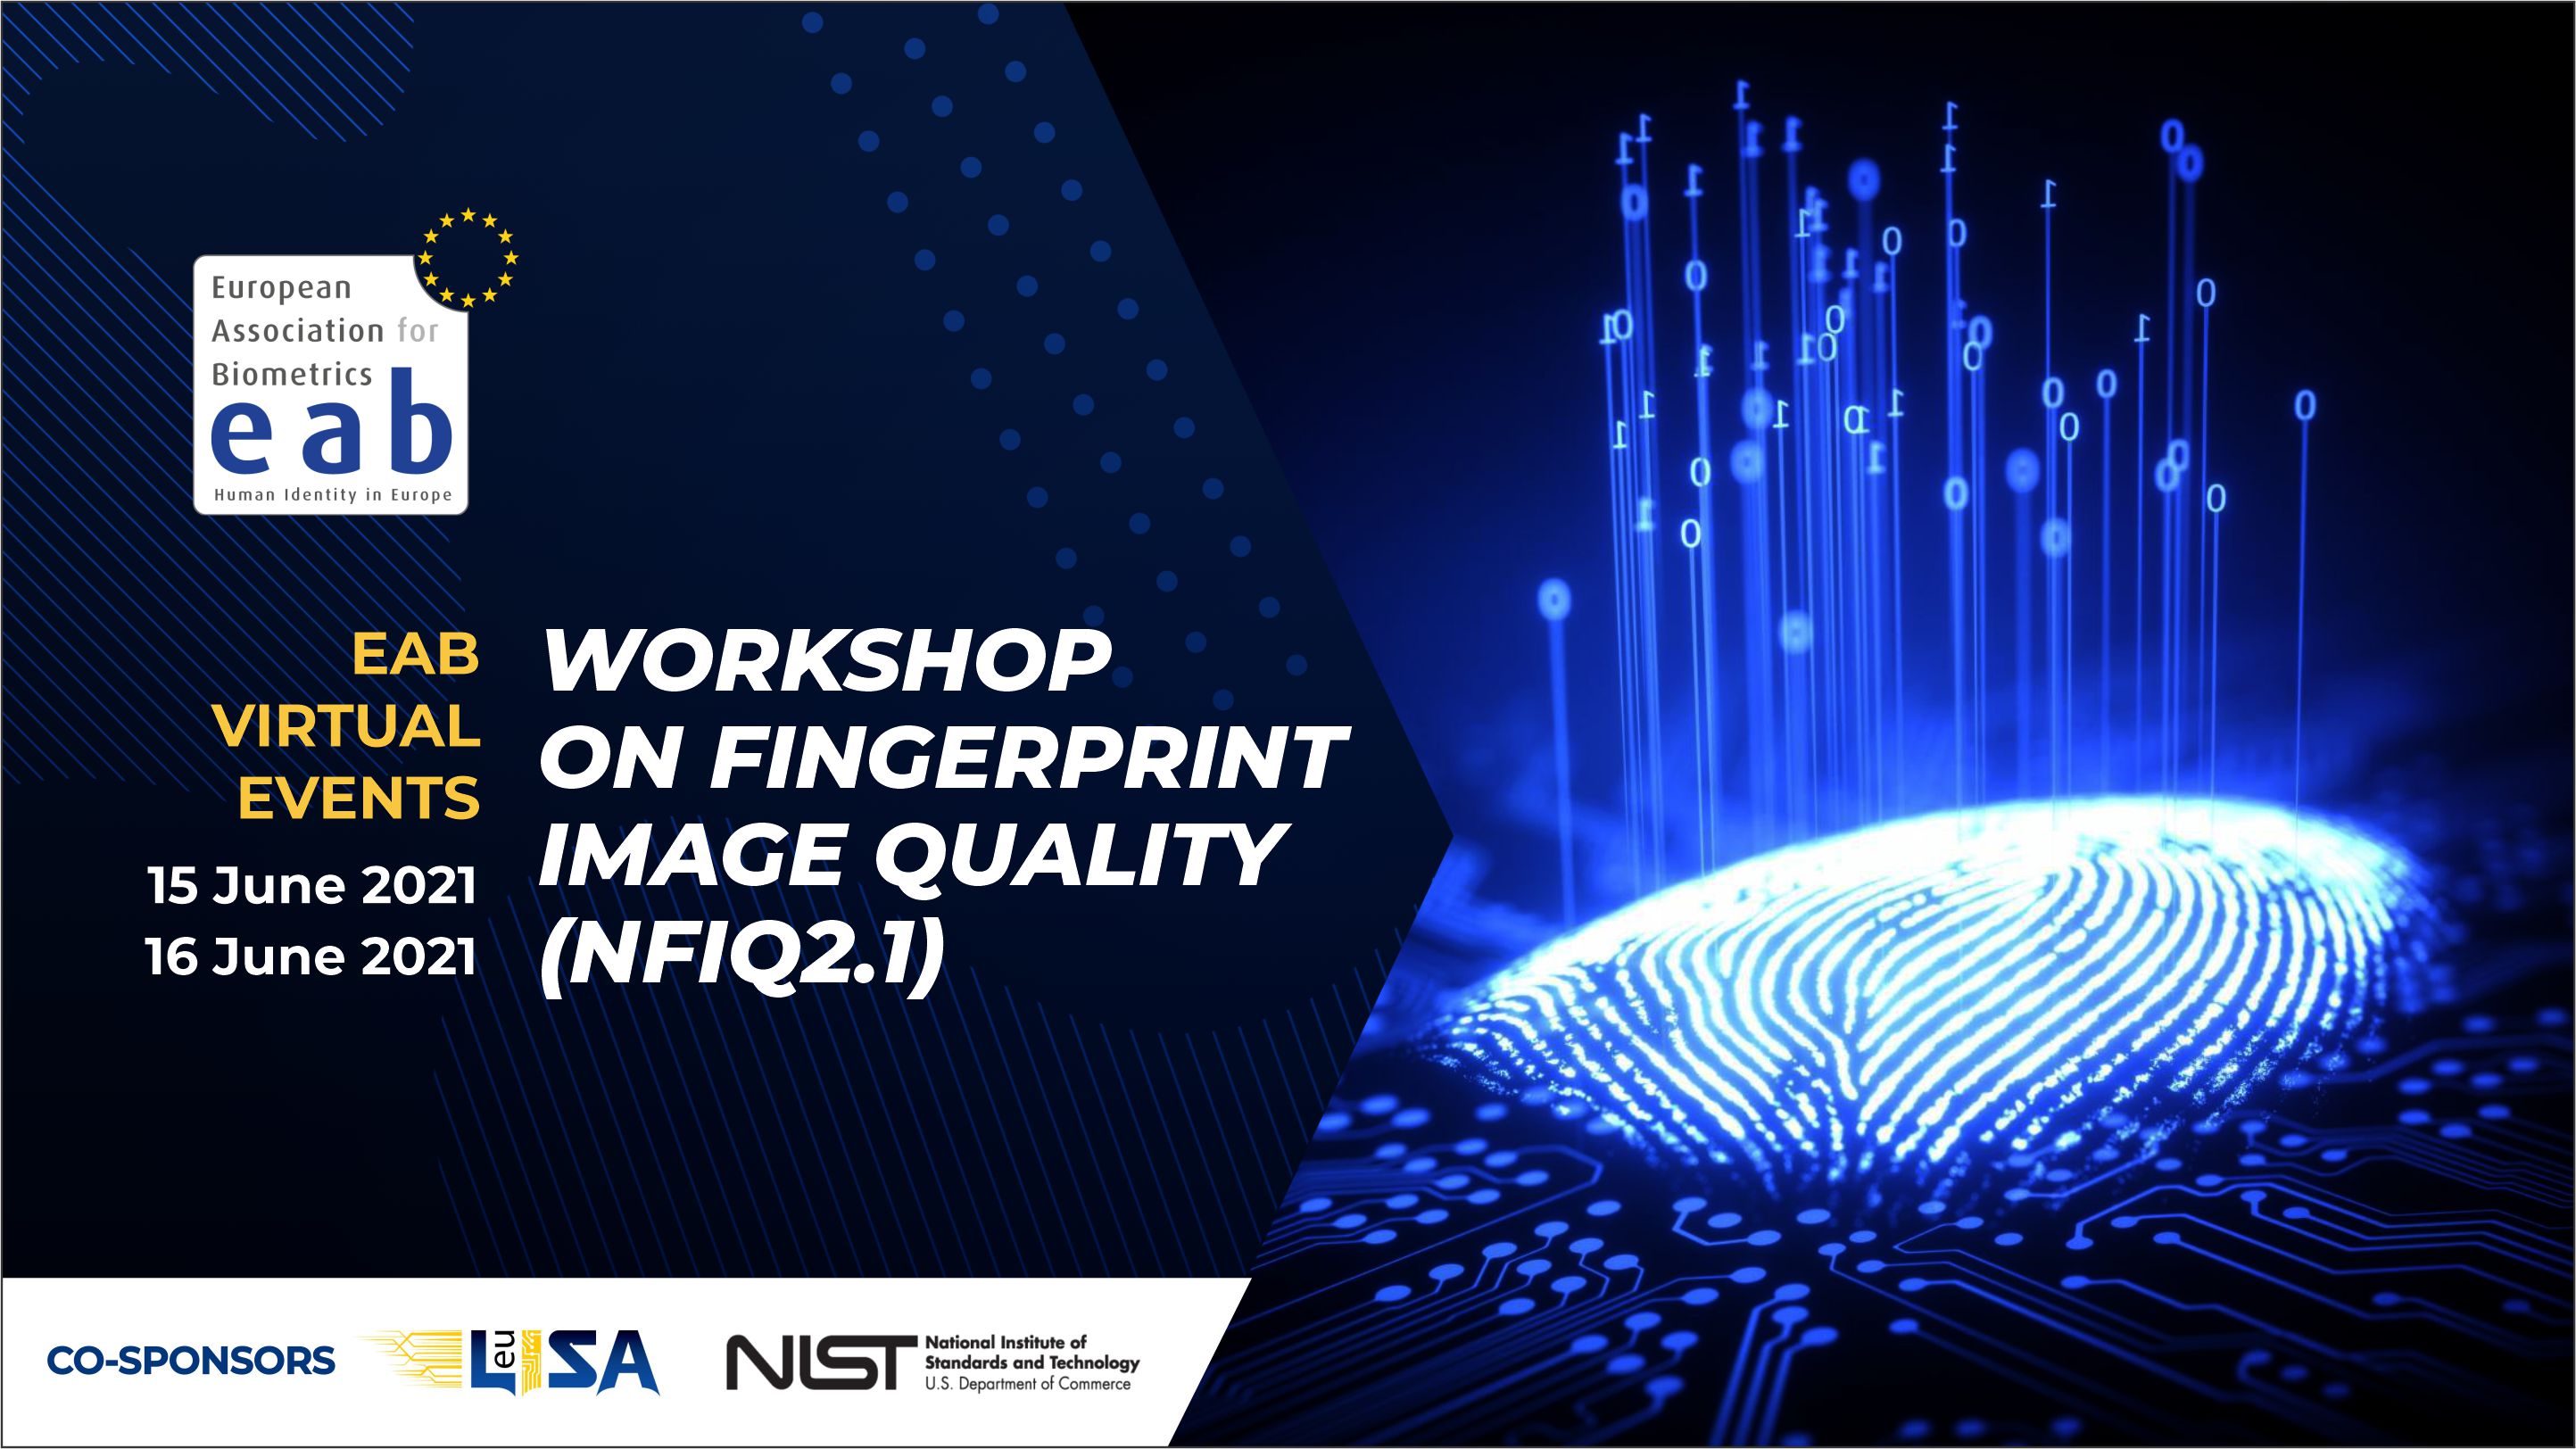 [Illustration] Banner on Fingerprint Image Quality (NFIQ2.1)